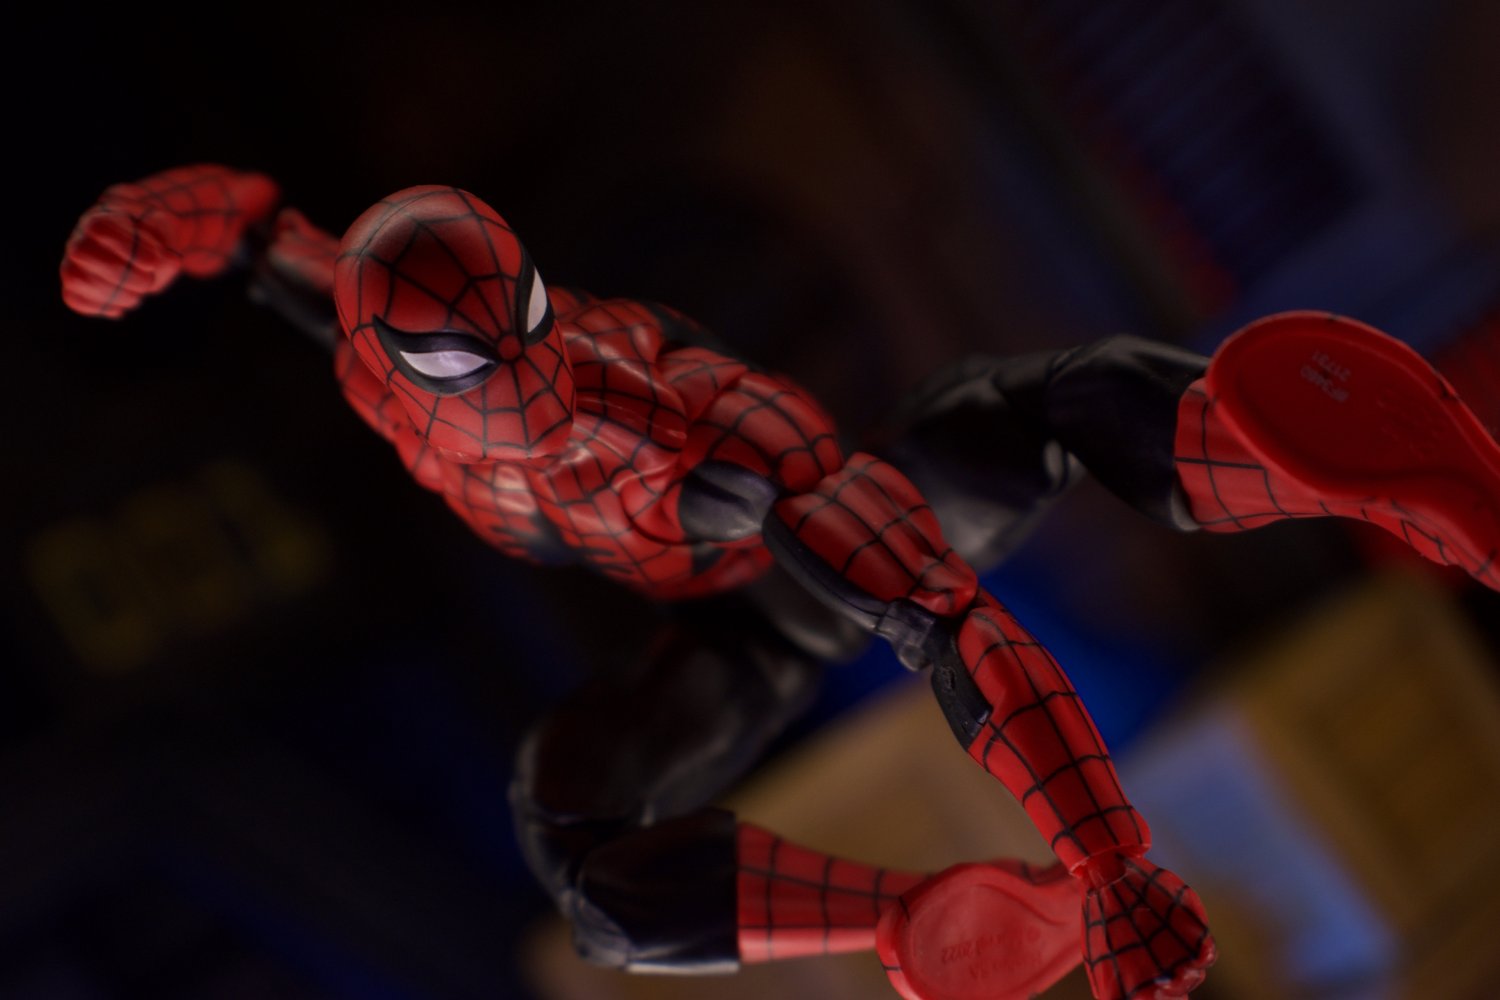 Marvel Legends Series Amazing Fantasy Spider Man — D Amazing